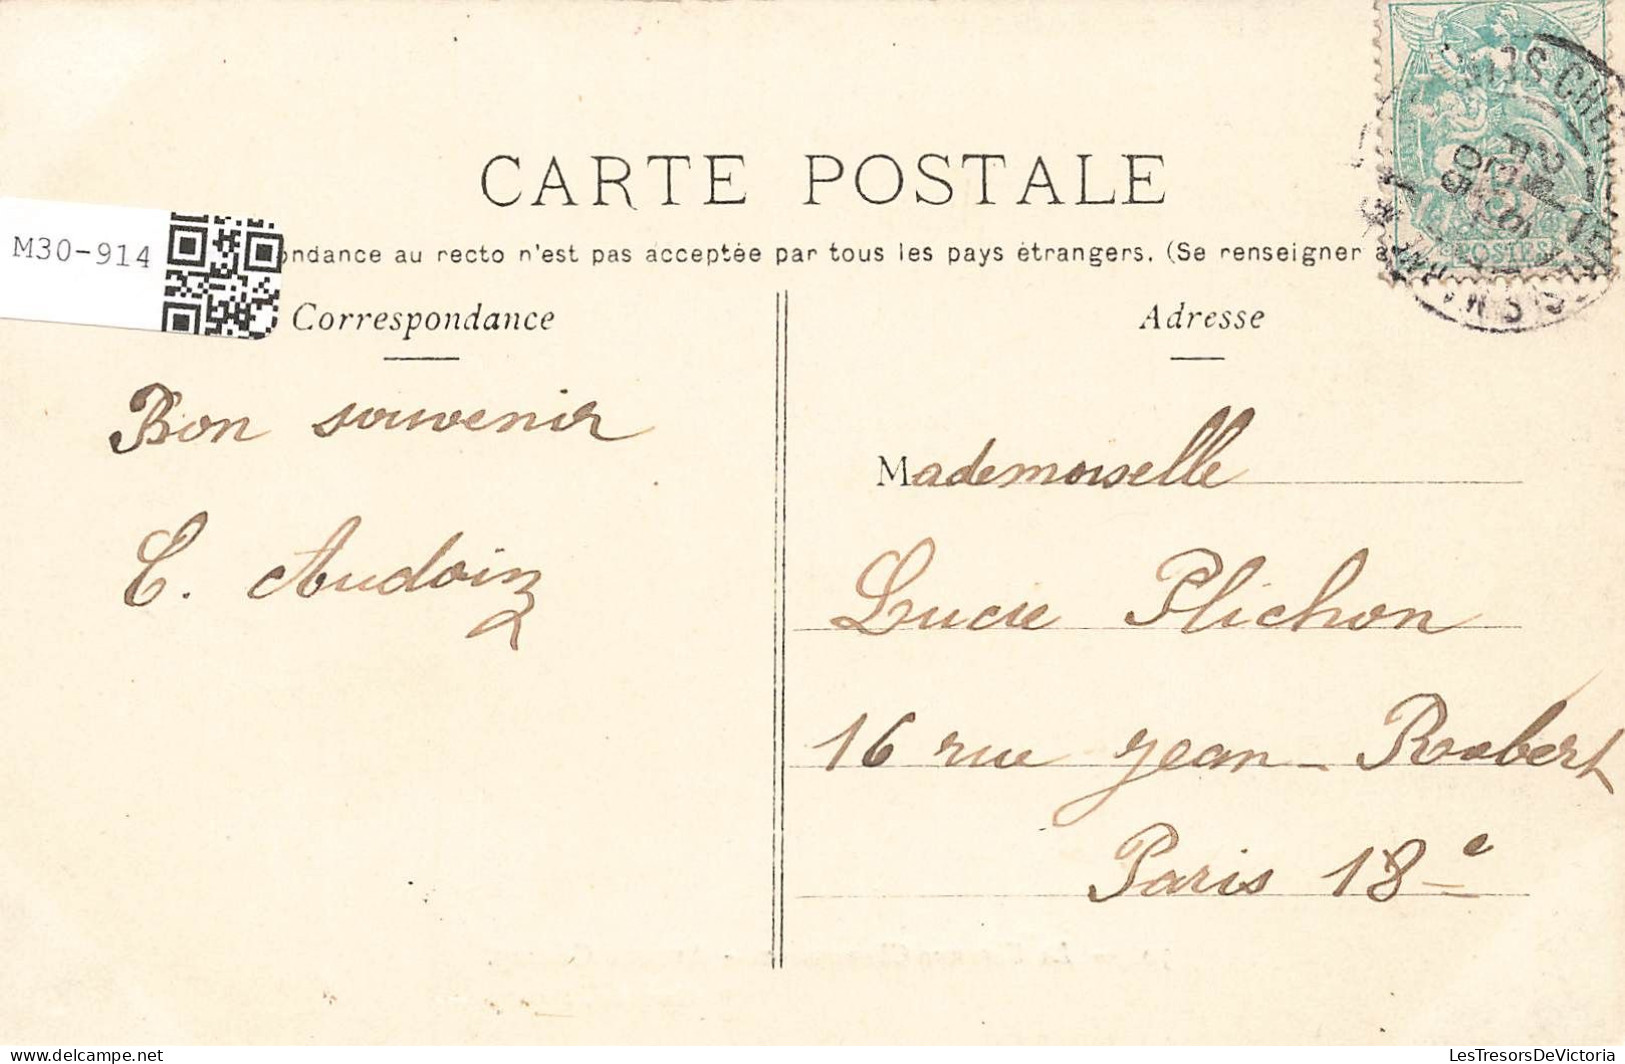 FRANCE - La Varenne Chennevières - Avenue Chanzy - Carte Postale Ancienne - Sonstige & Ohne Zuordnung